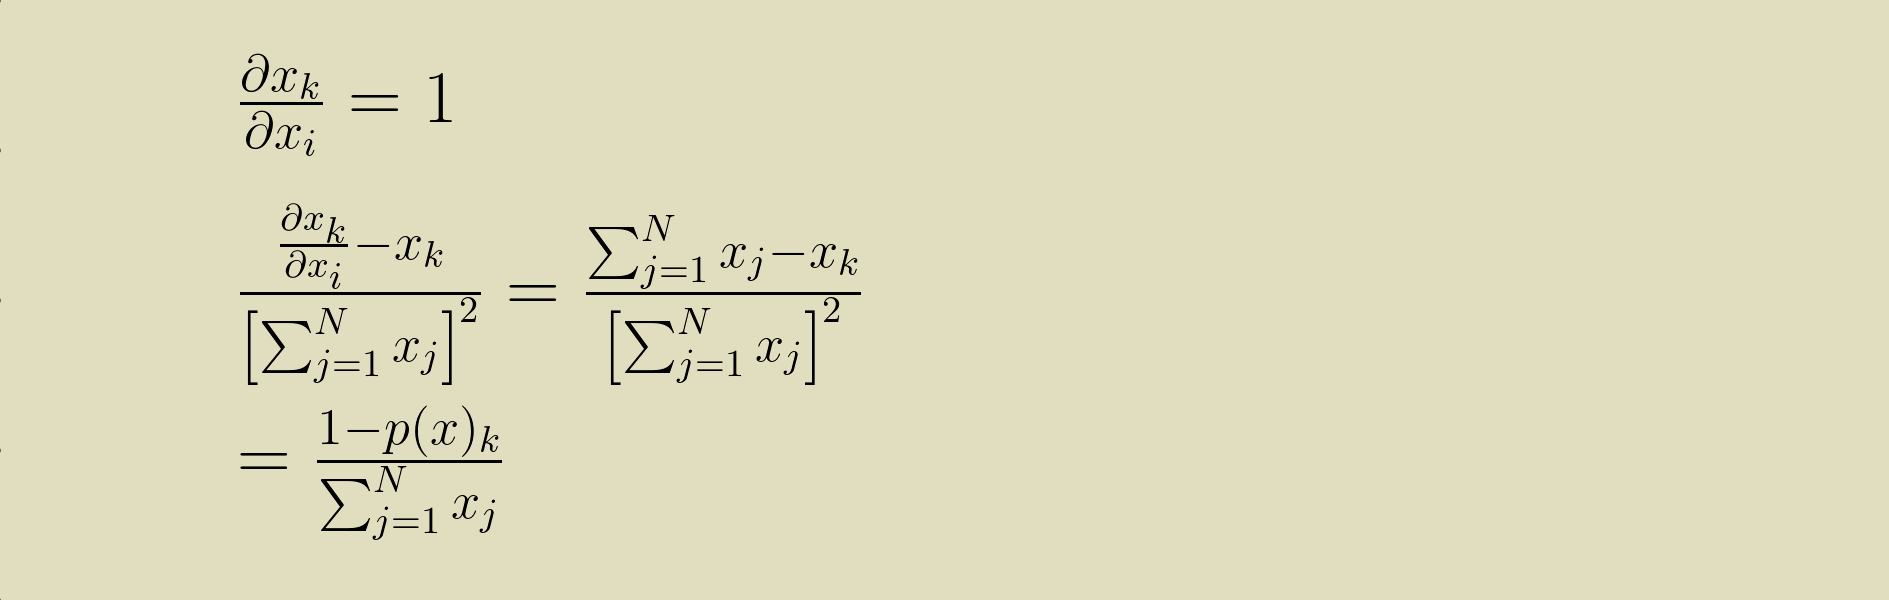 pmf derivative, part 7